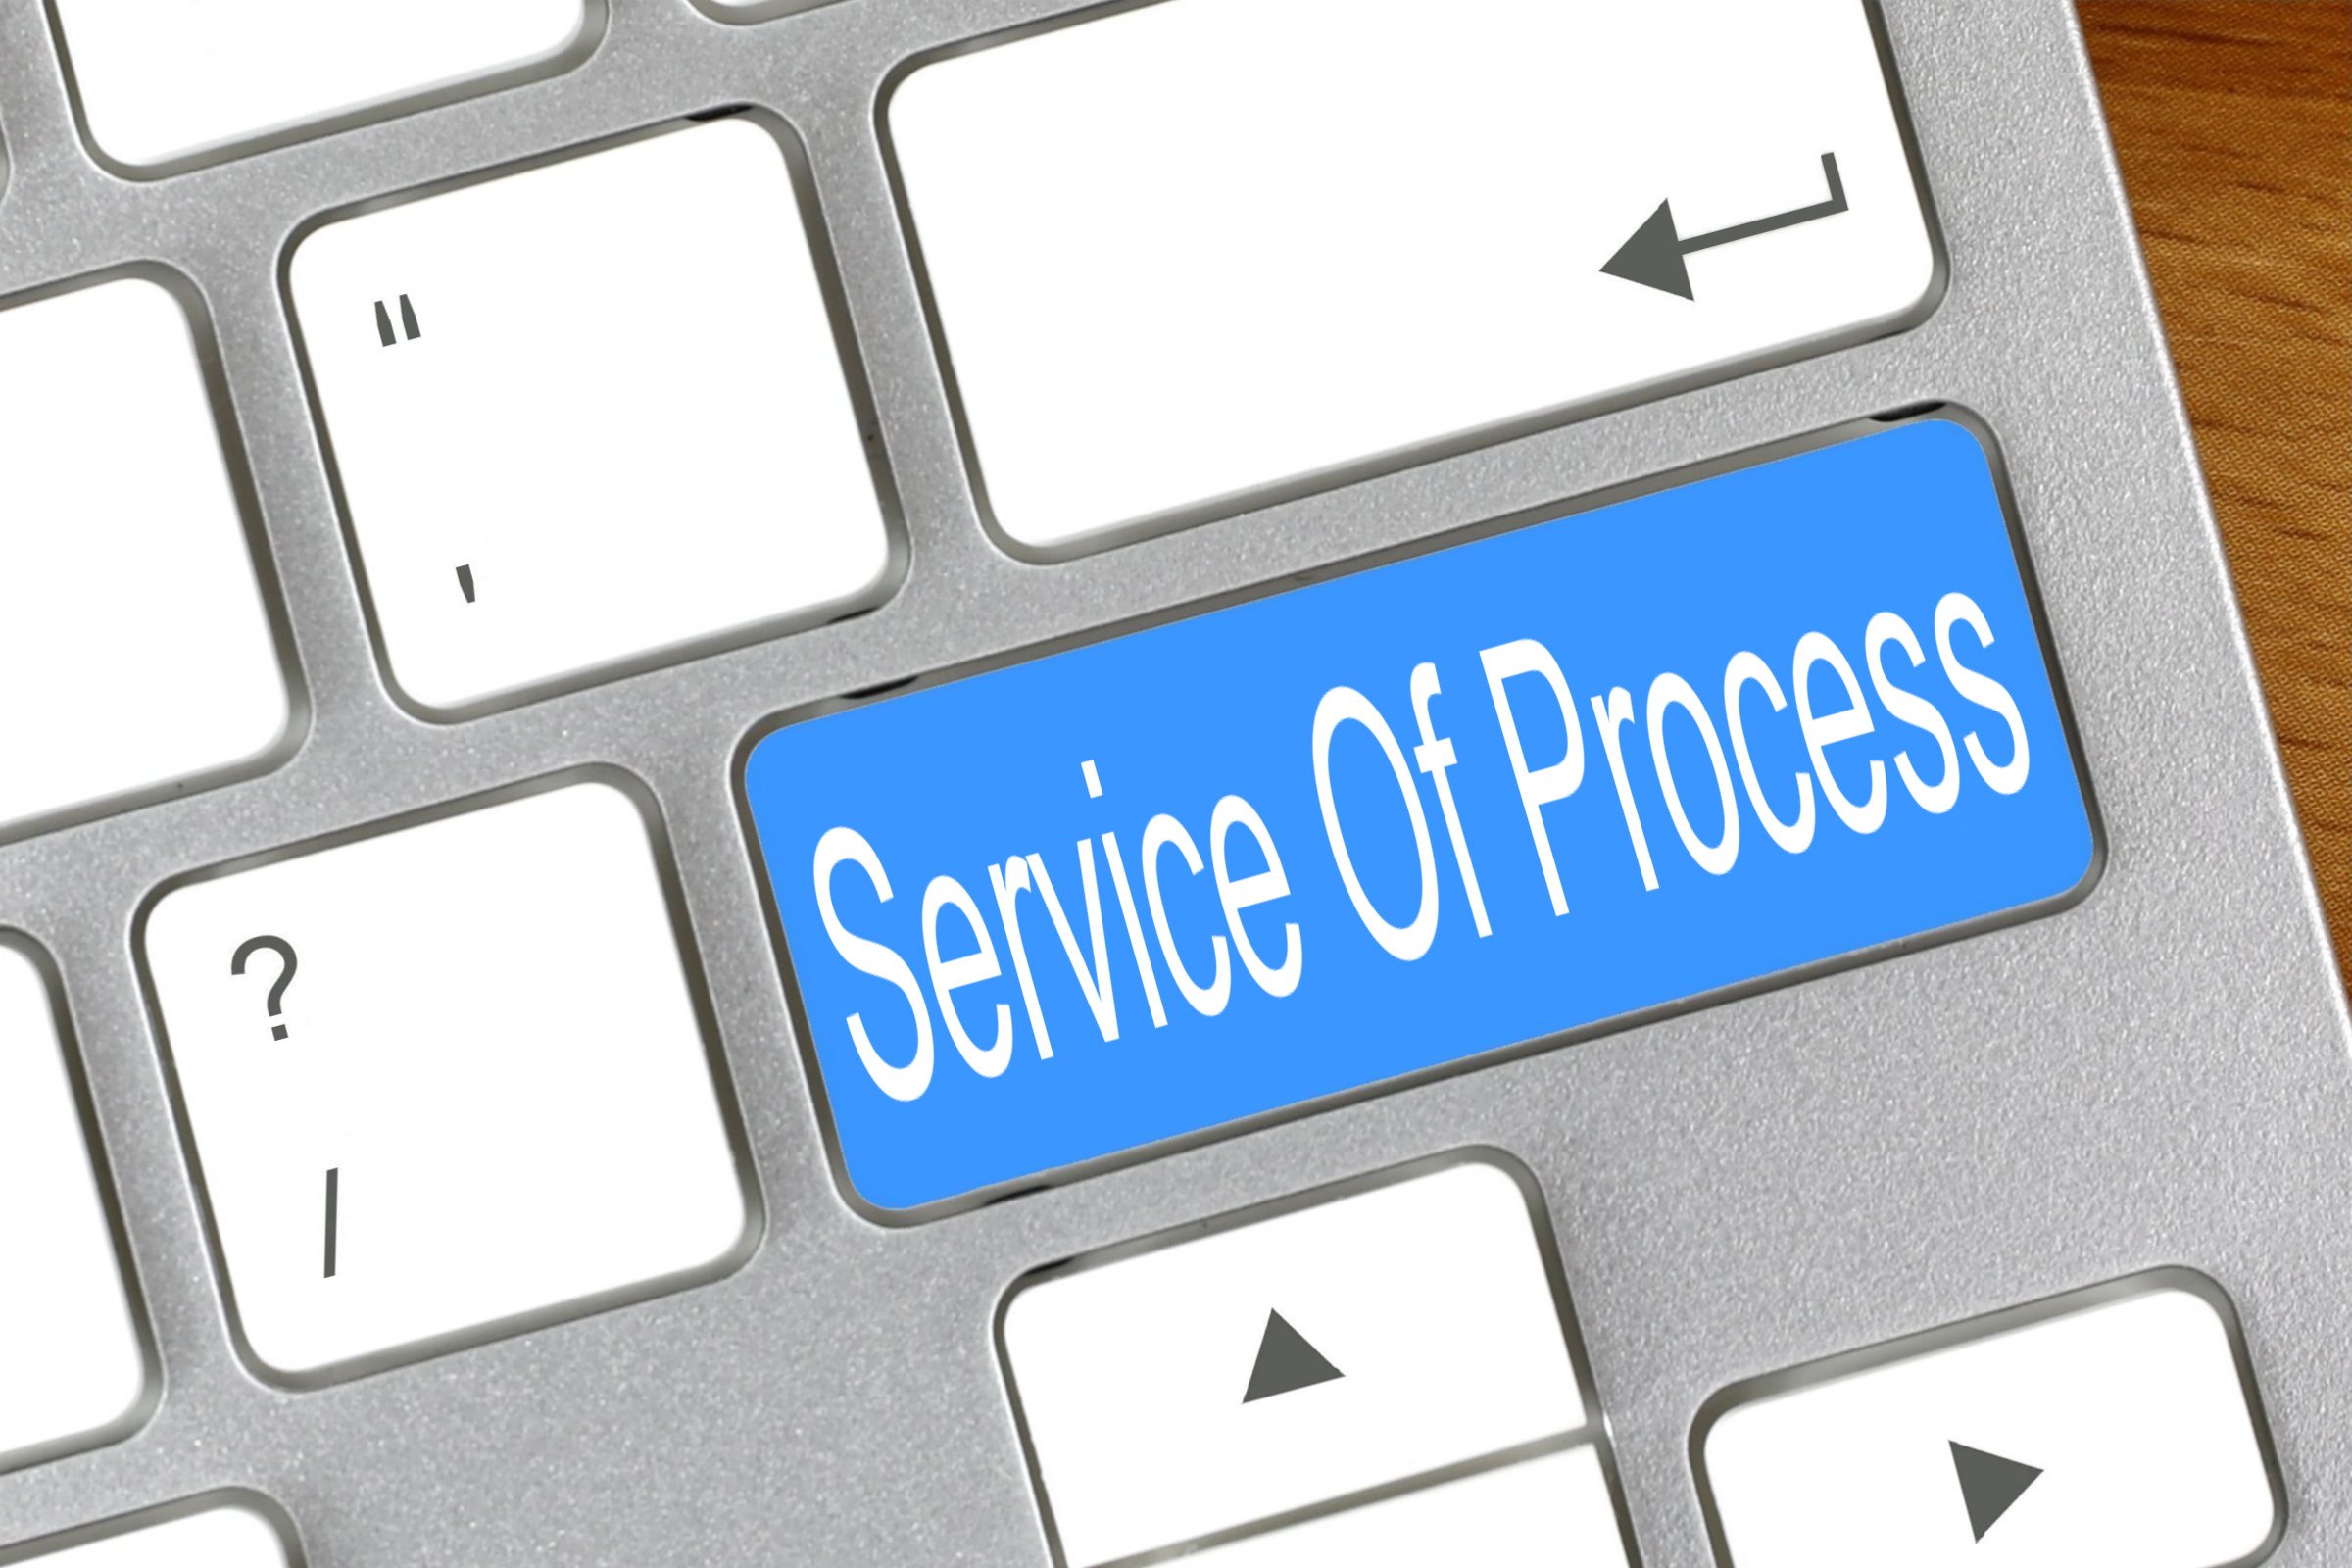 service of process